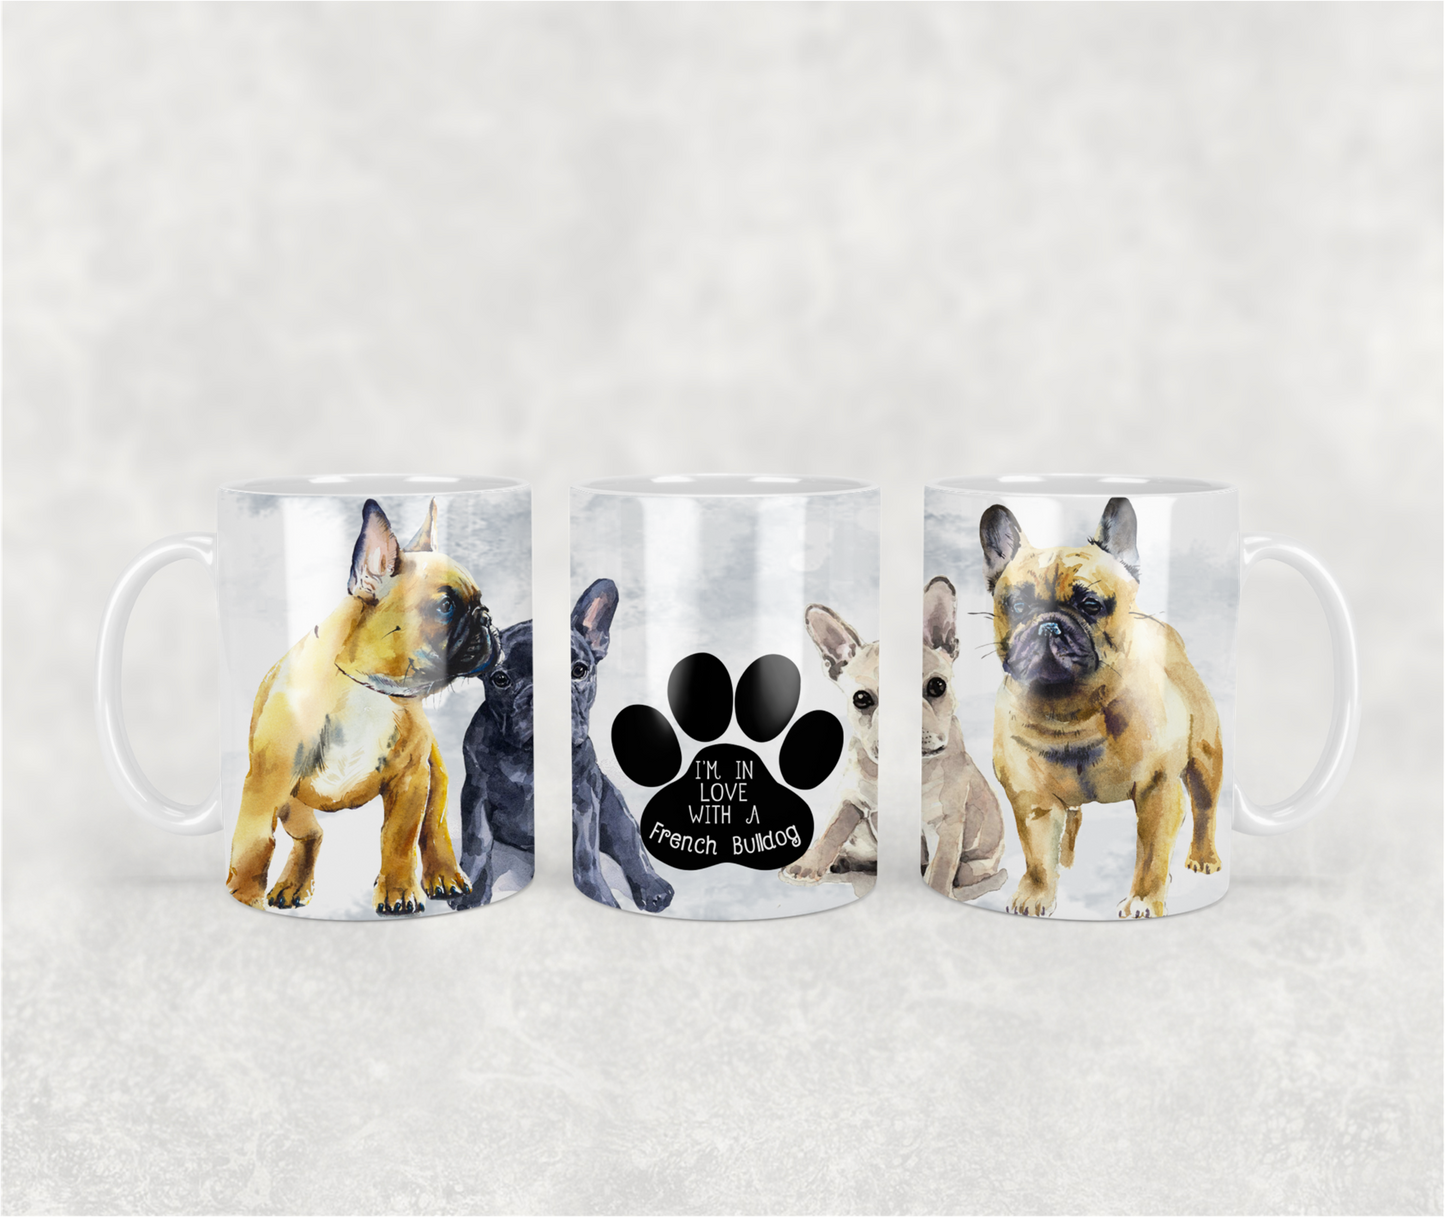  French Bulldogs Coffee Mug by Free Spirit Accessories sold by Free Spirit Accessories